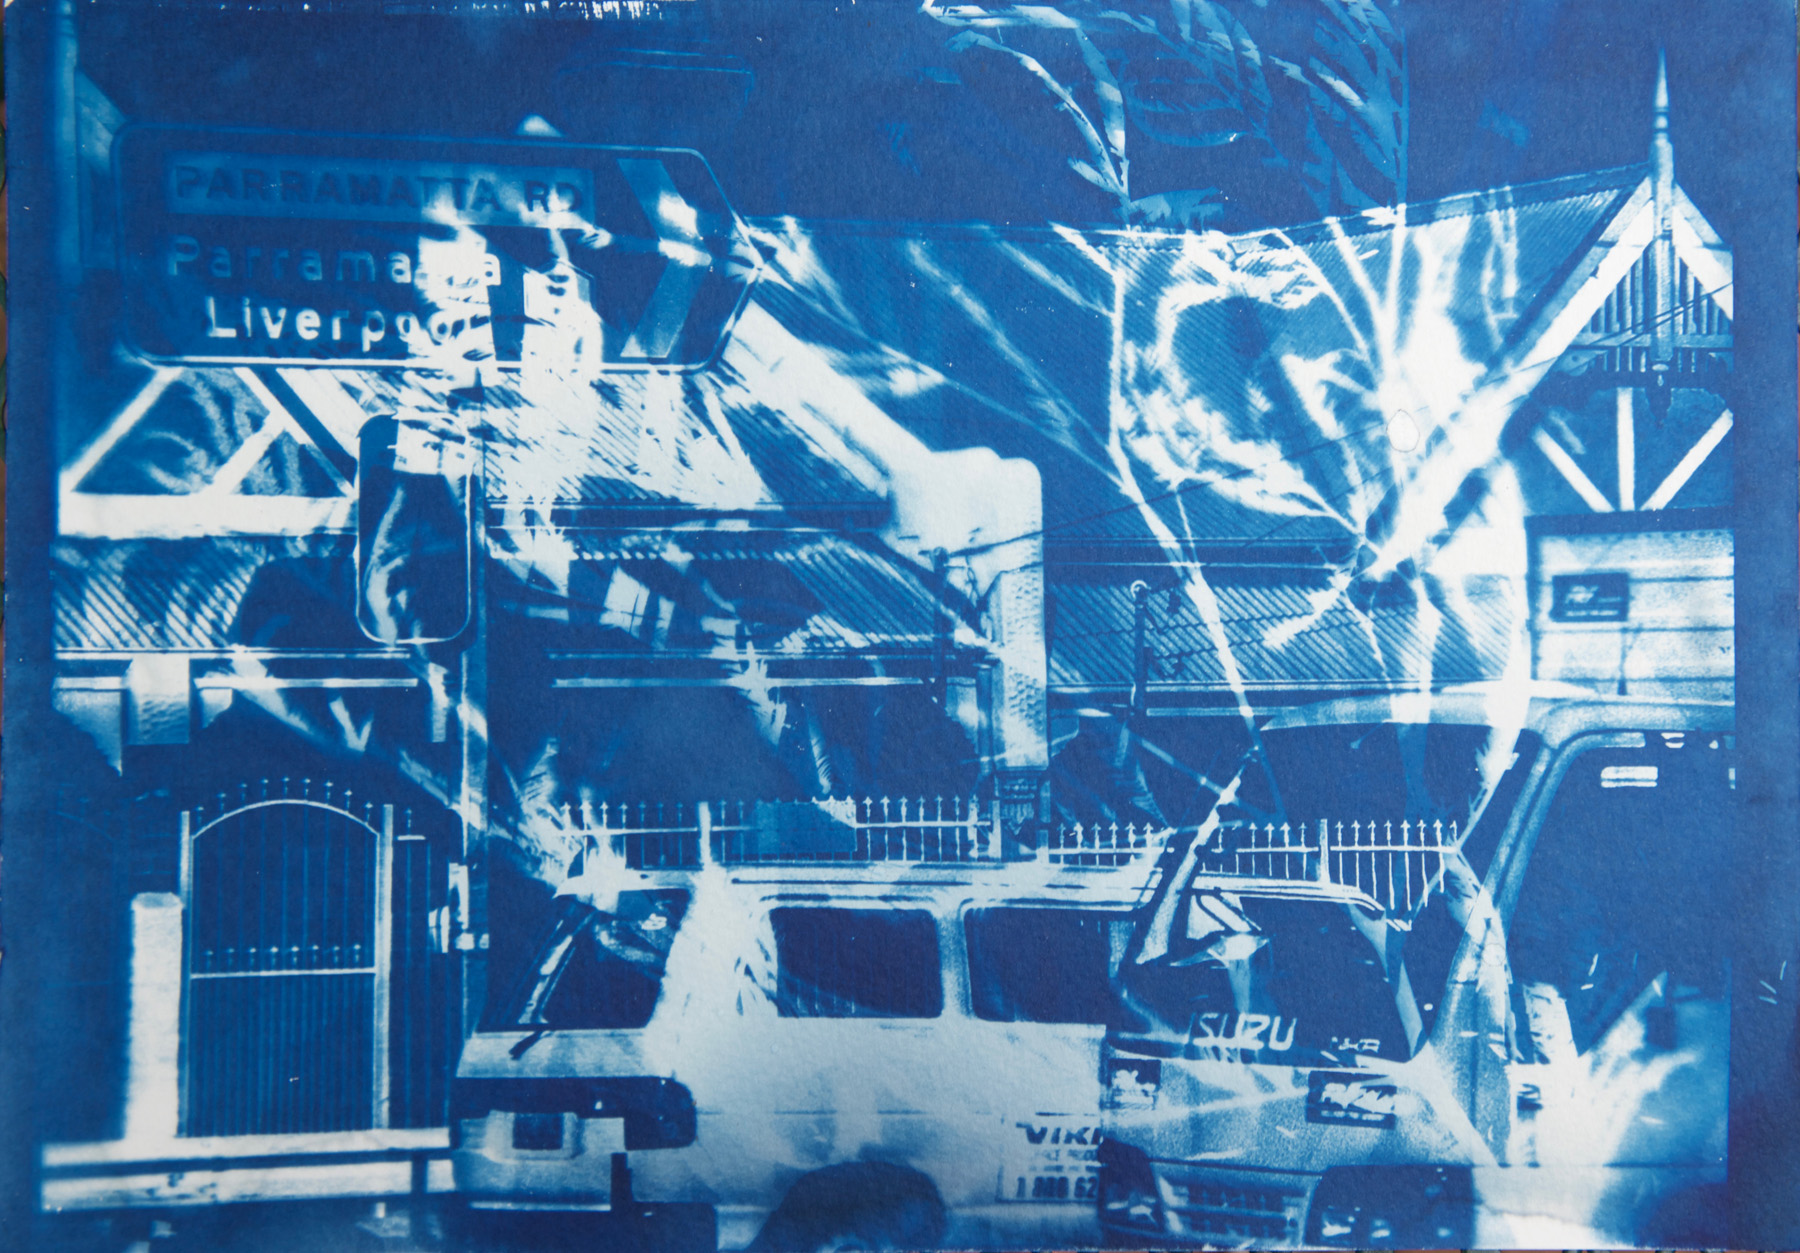    Parramatta Road 2    cyanotype on paper, 9" x 12" 